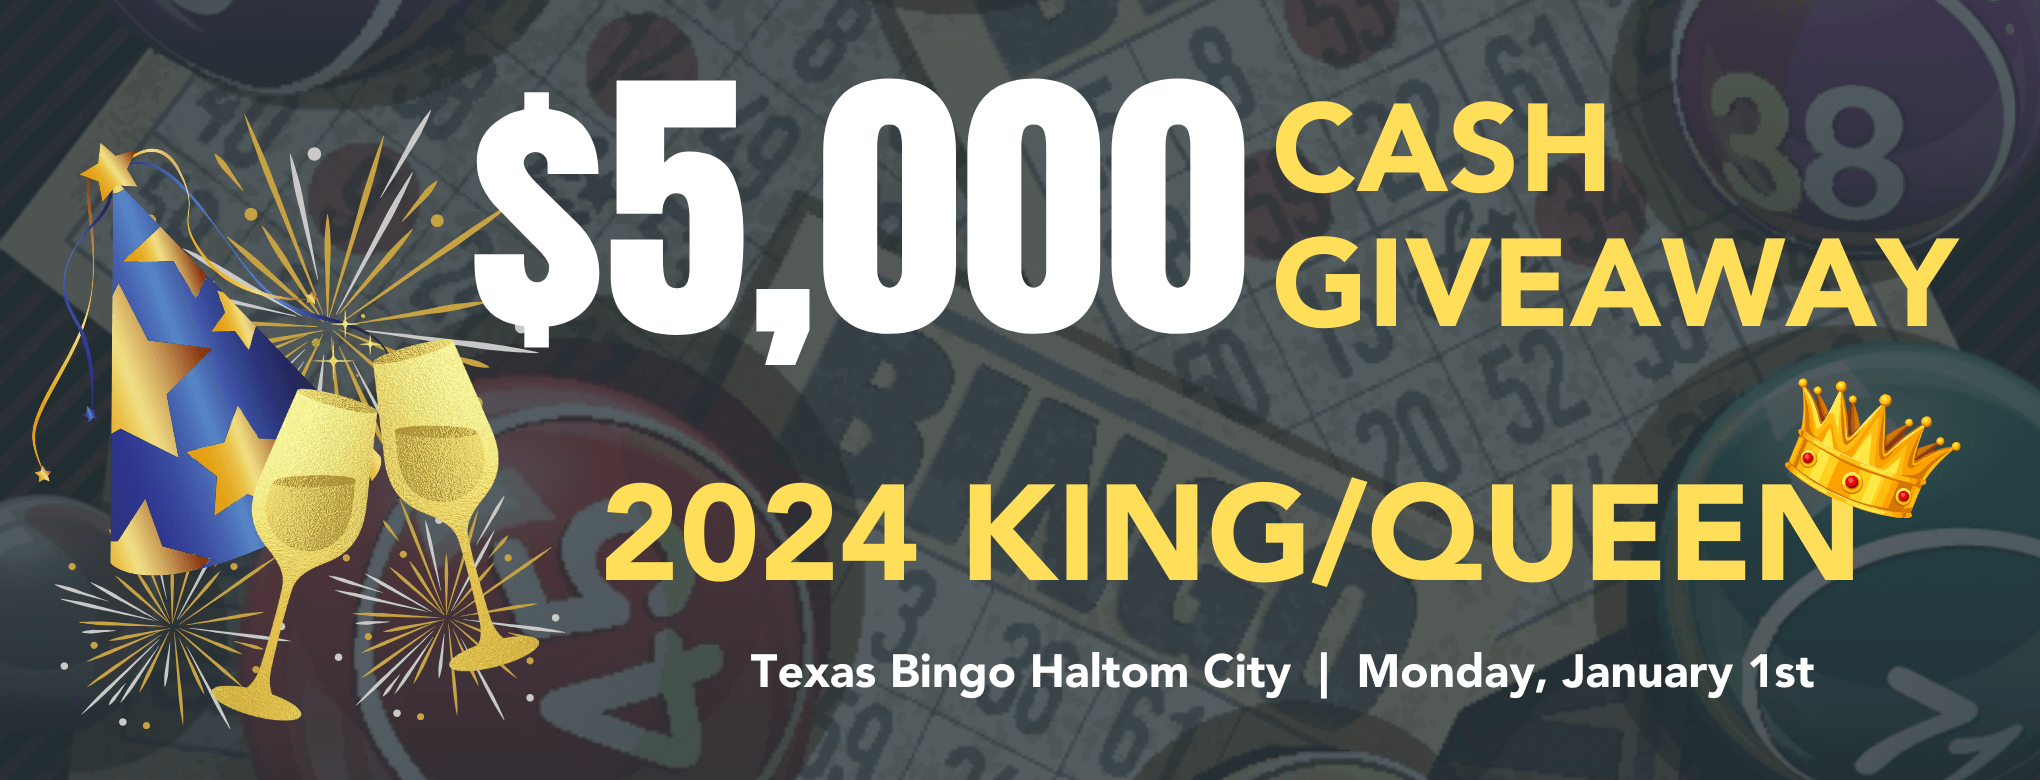 New Year’s Day at Texas Bingo Haltom City